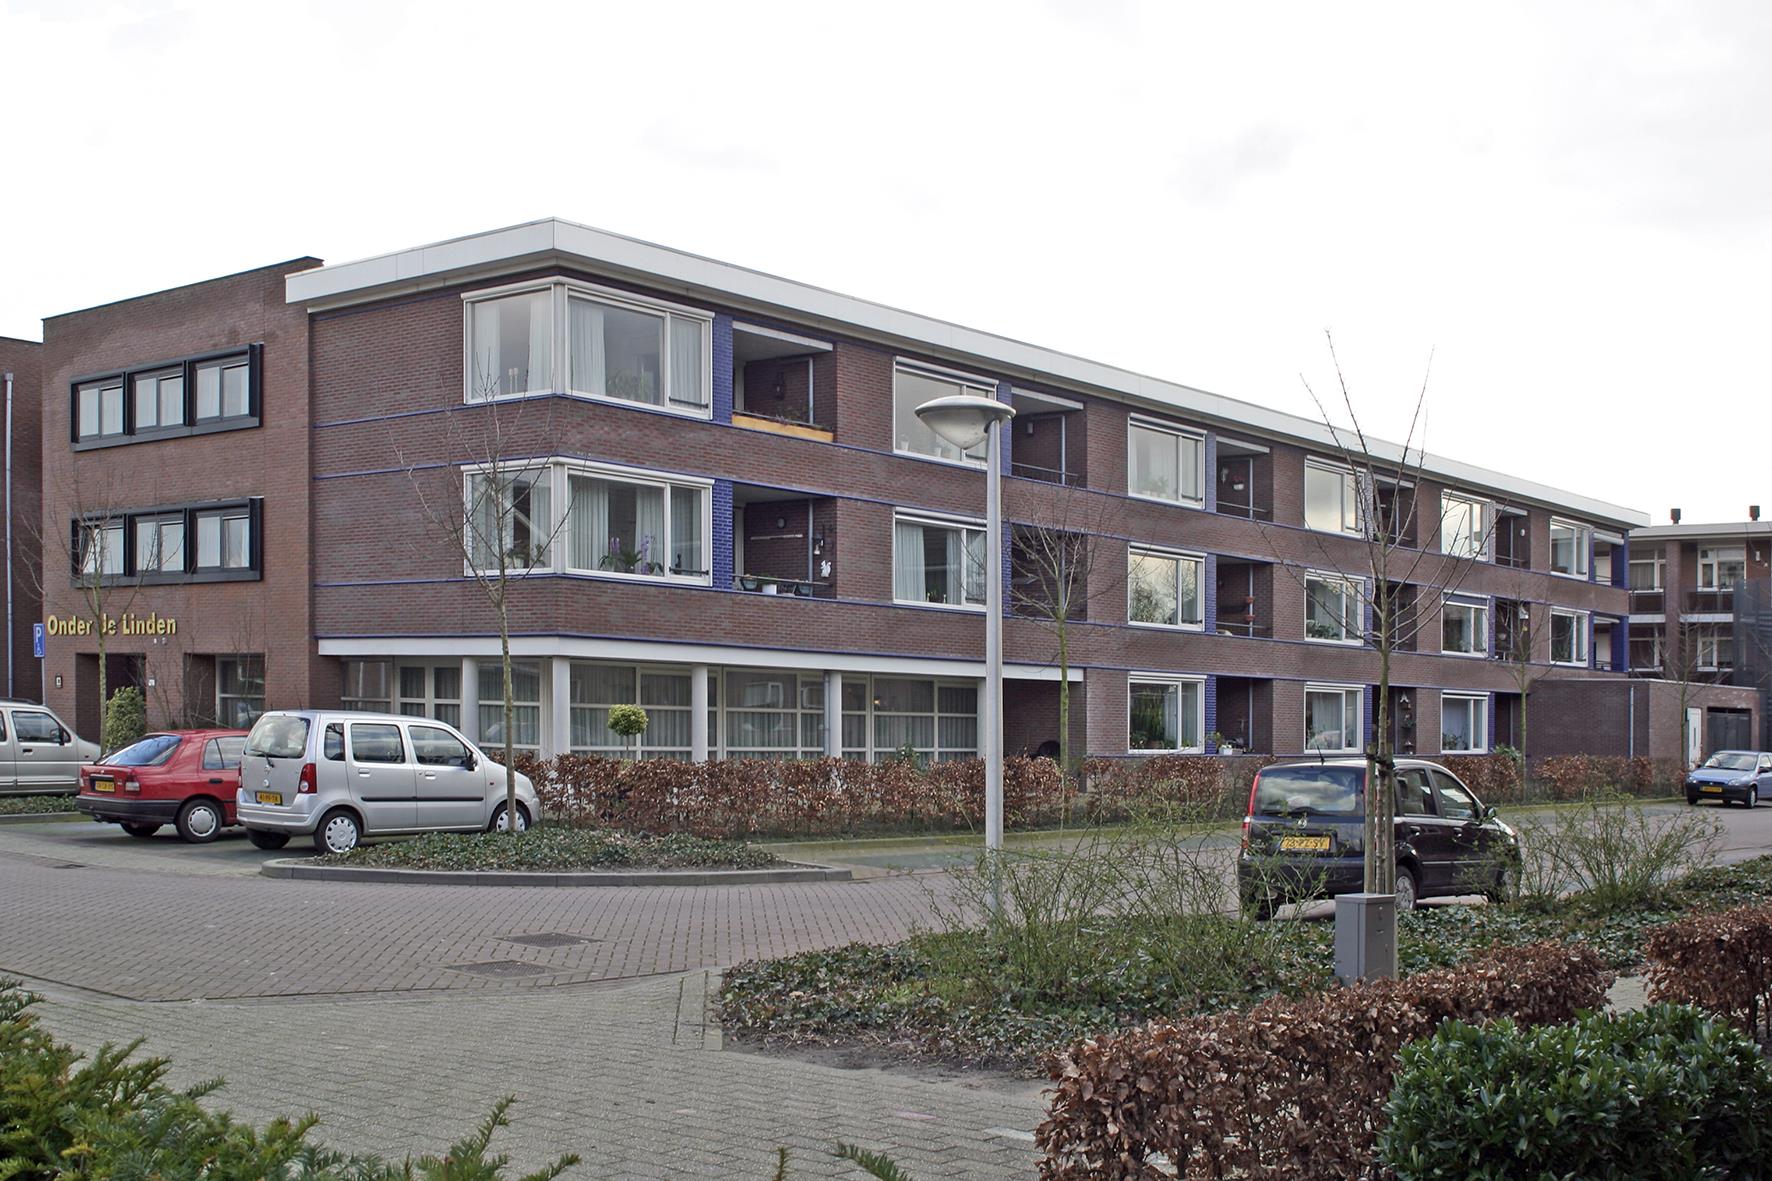 Penitentenstraat 29, 6851 VD Huissen, Nederland